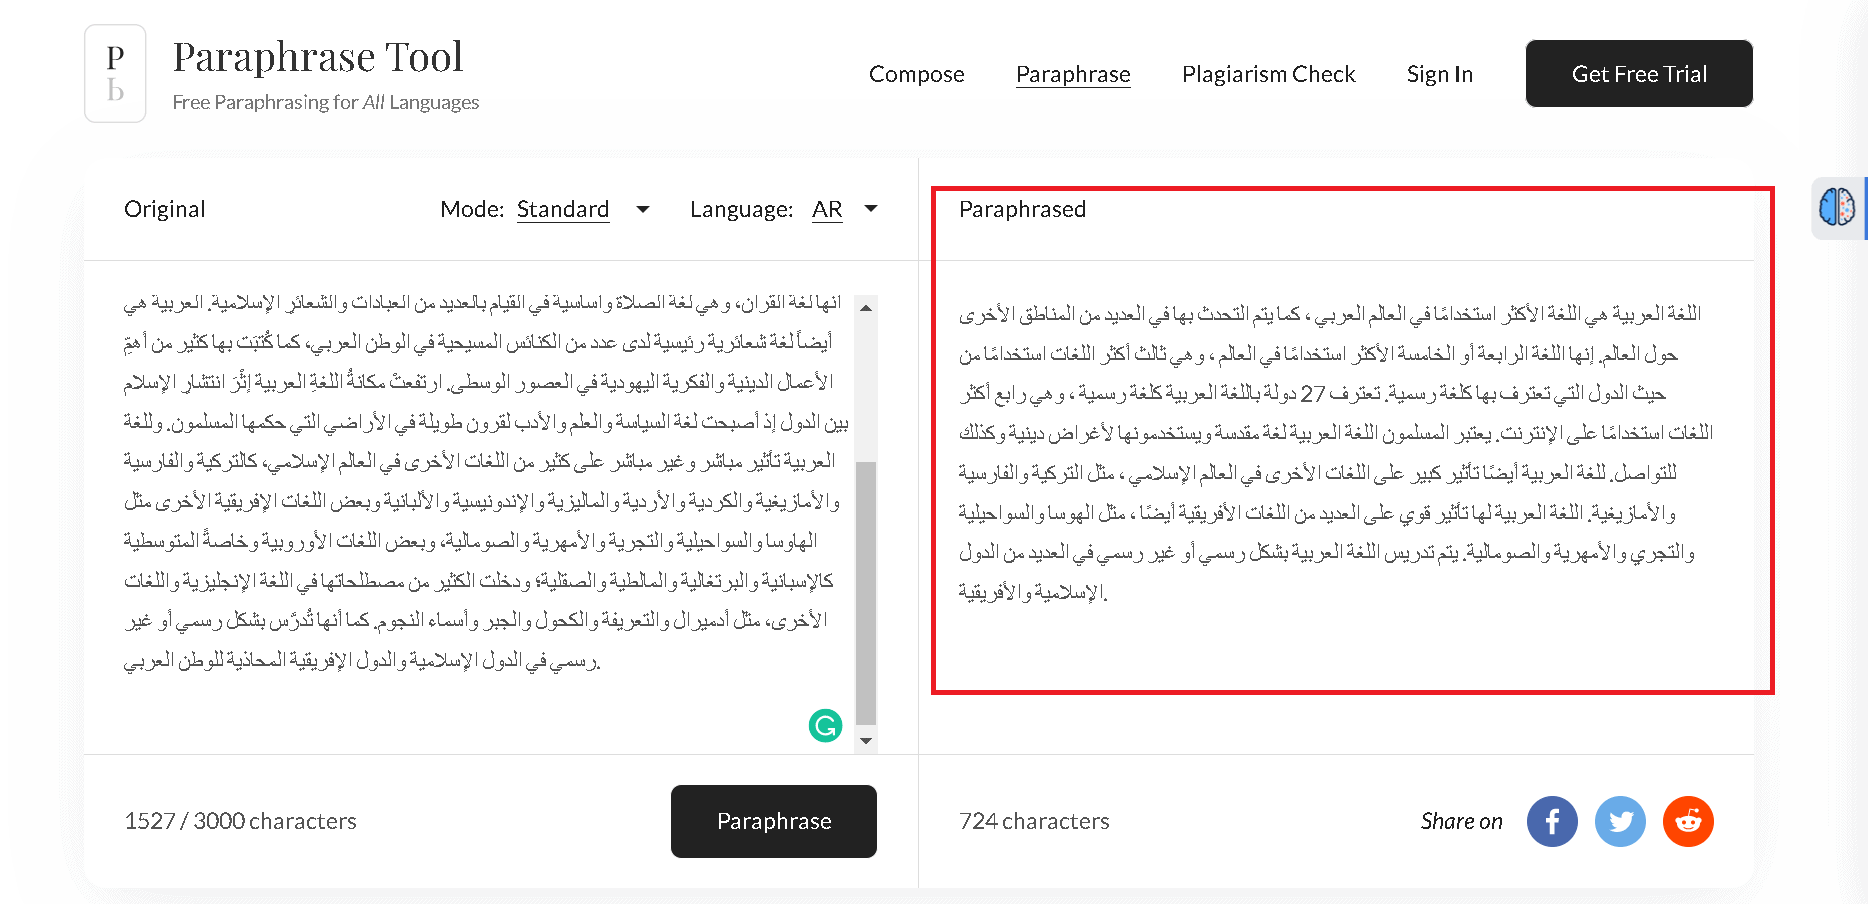 Paraphrase Tool can rephrase Arabic language content